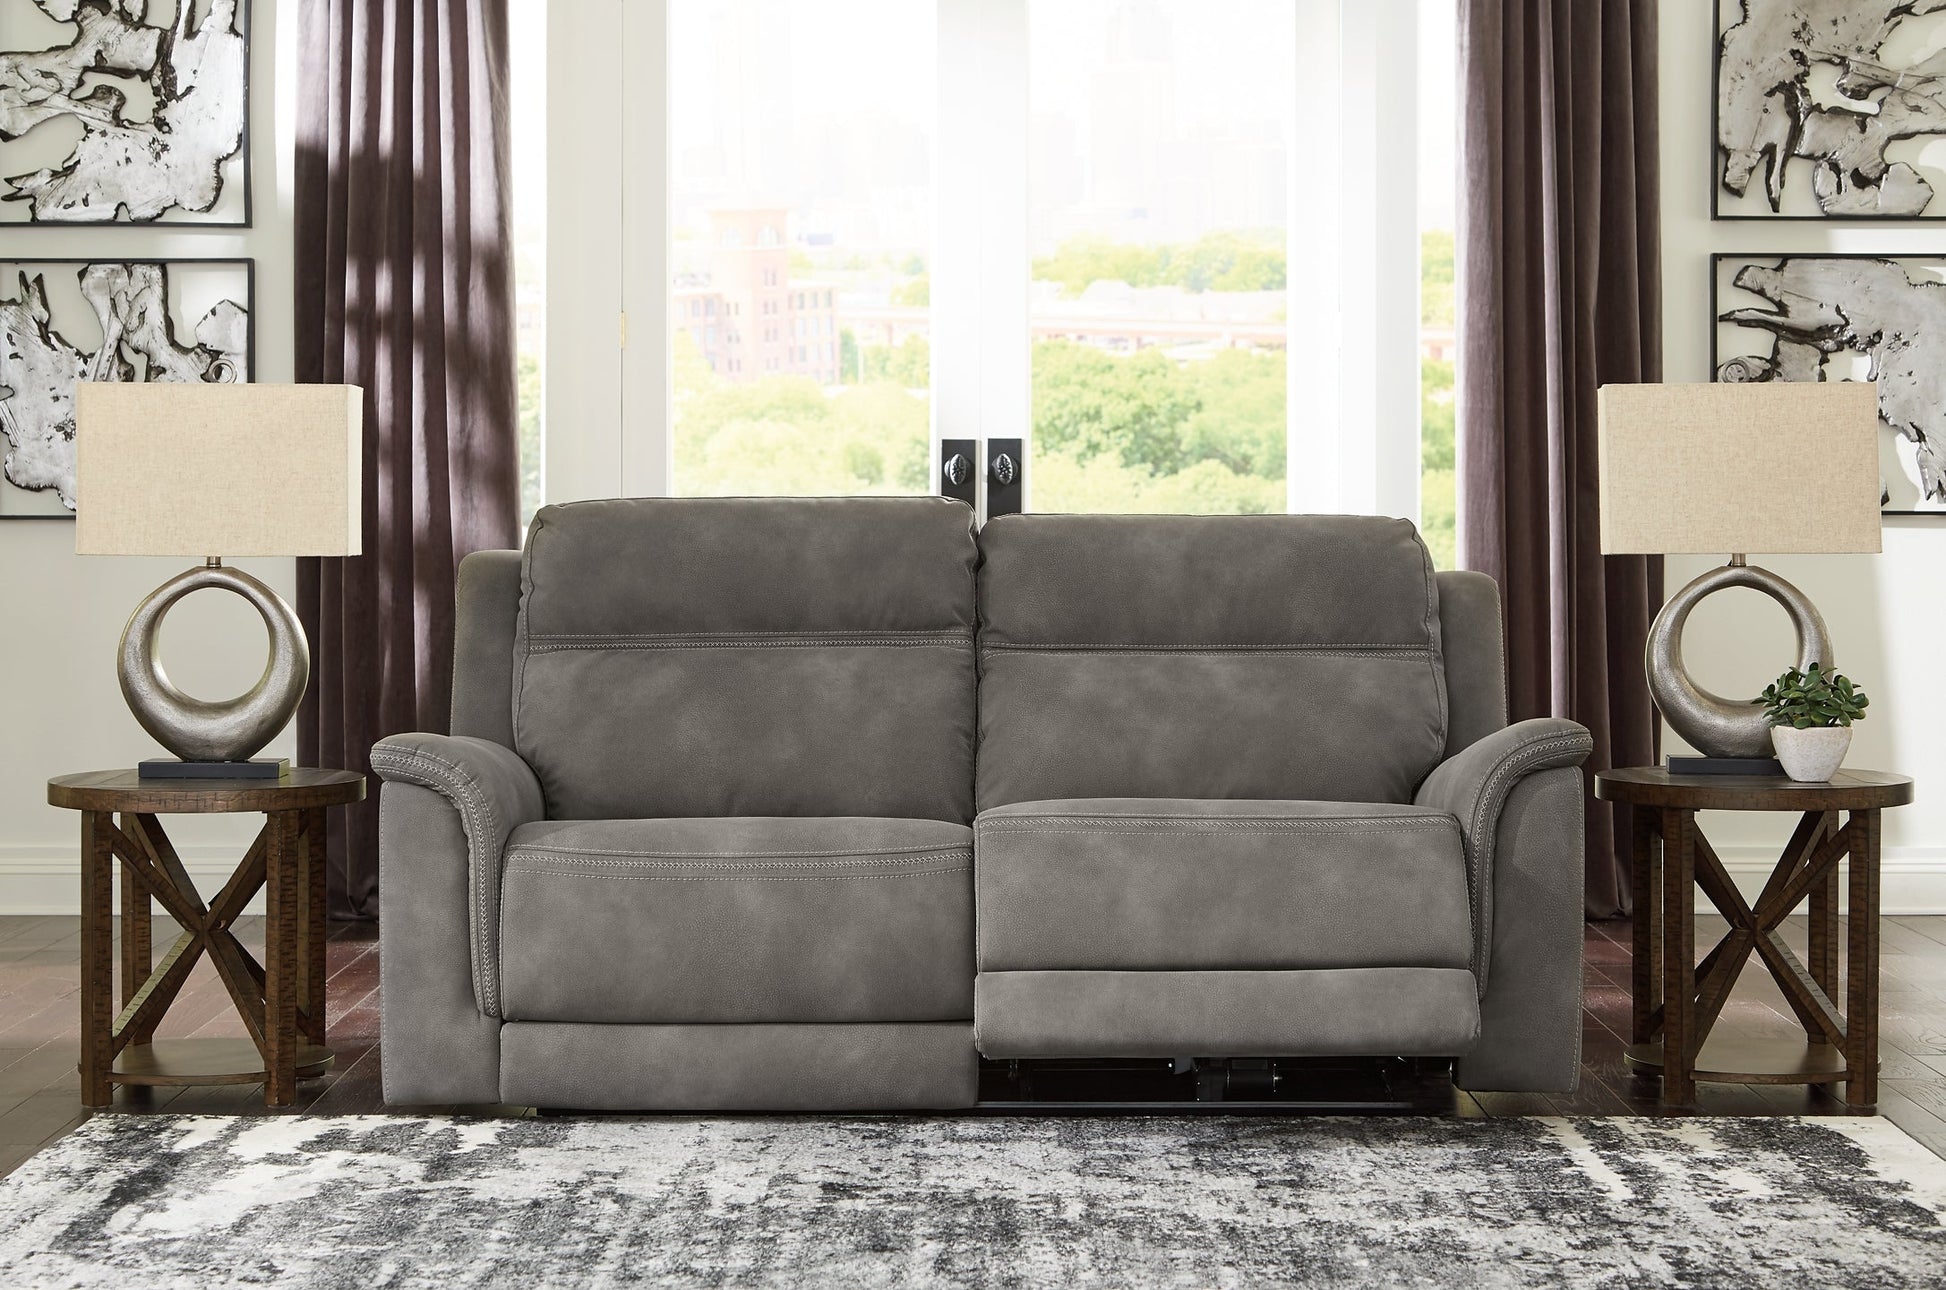 Next-Gen DuraPella 2 Seat PWR REC Sofa ADJ HDREST at Cloud 9 Mattress & Furniture furniture, home furnishing, home decor